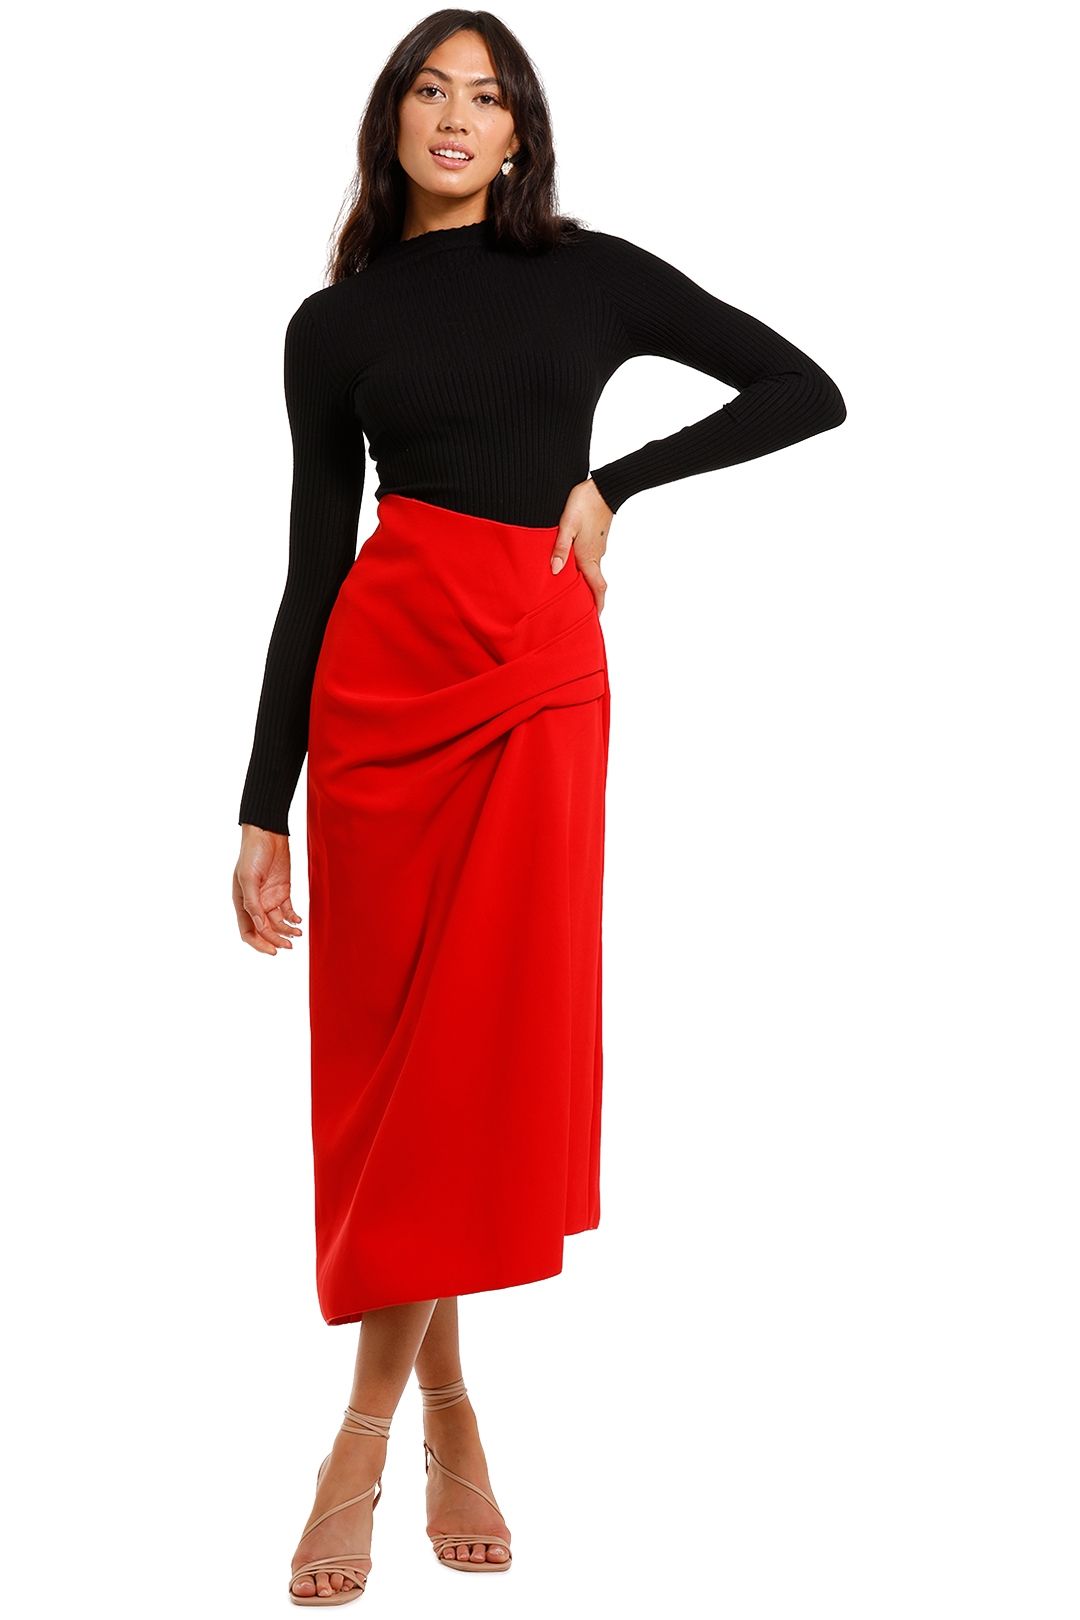 Acler Thistle Skirt Red asymmetric